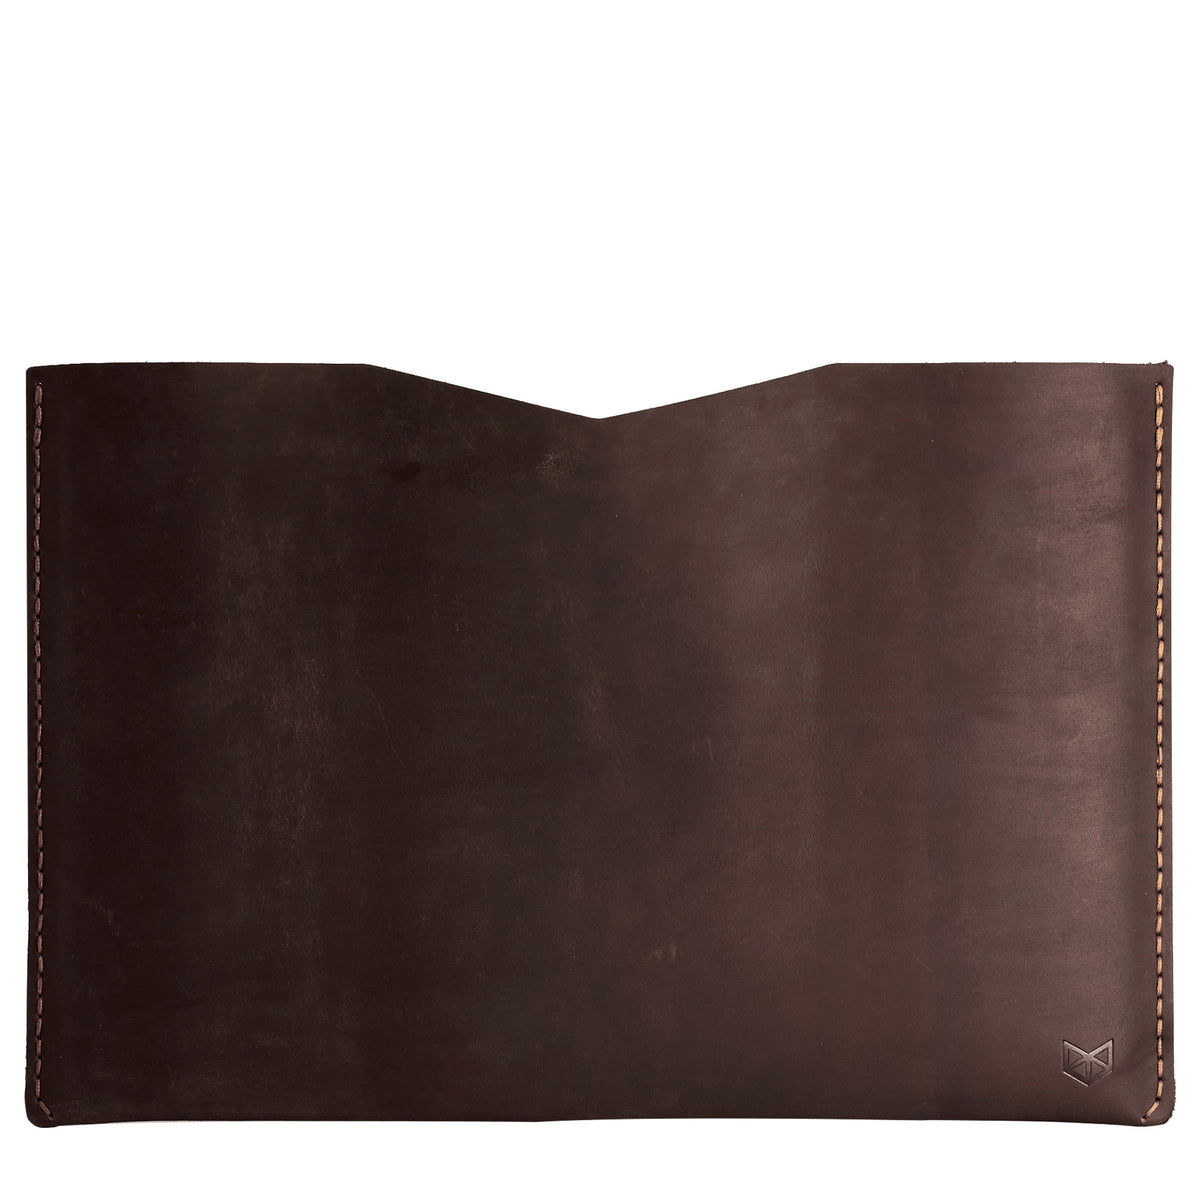 BASIC // MARRON: Leather Microsoft Surface by Capra Leather